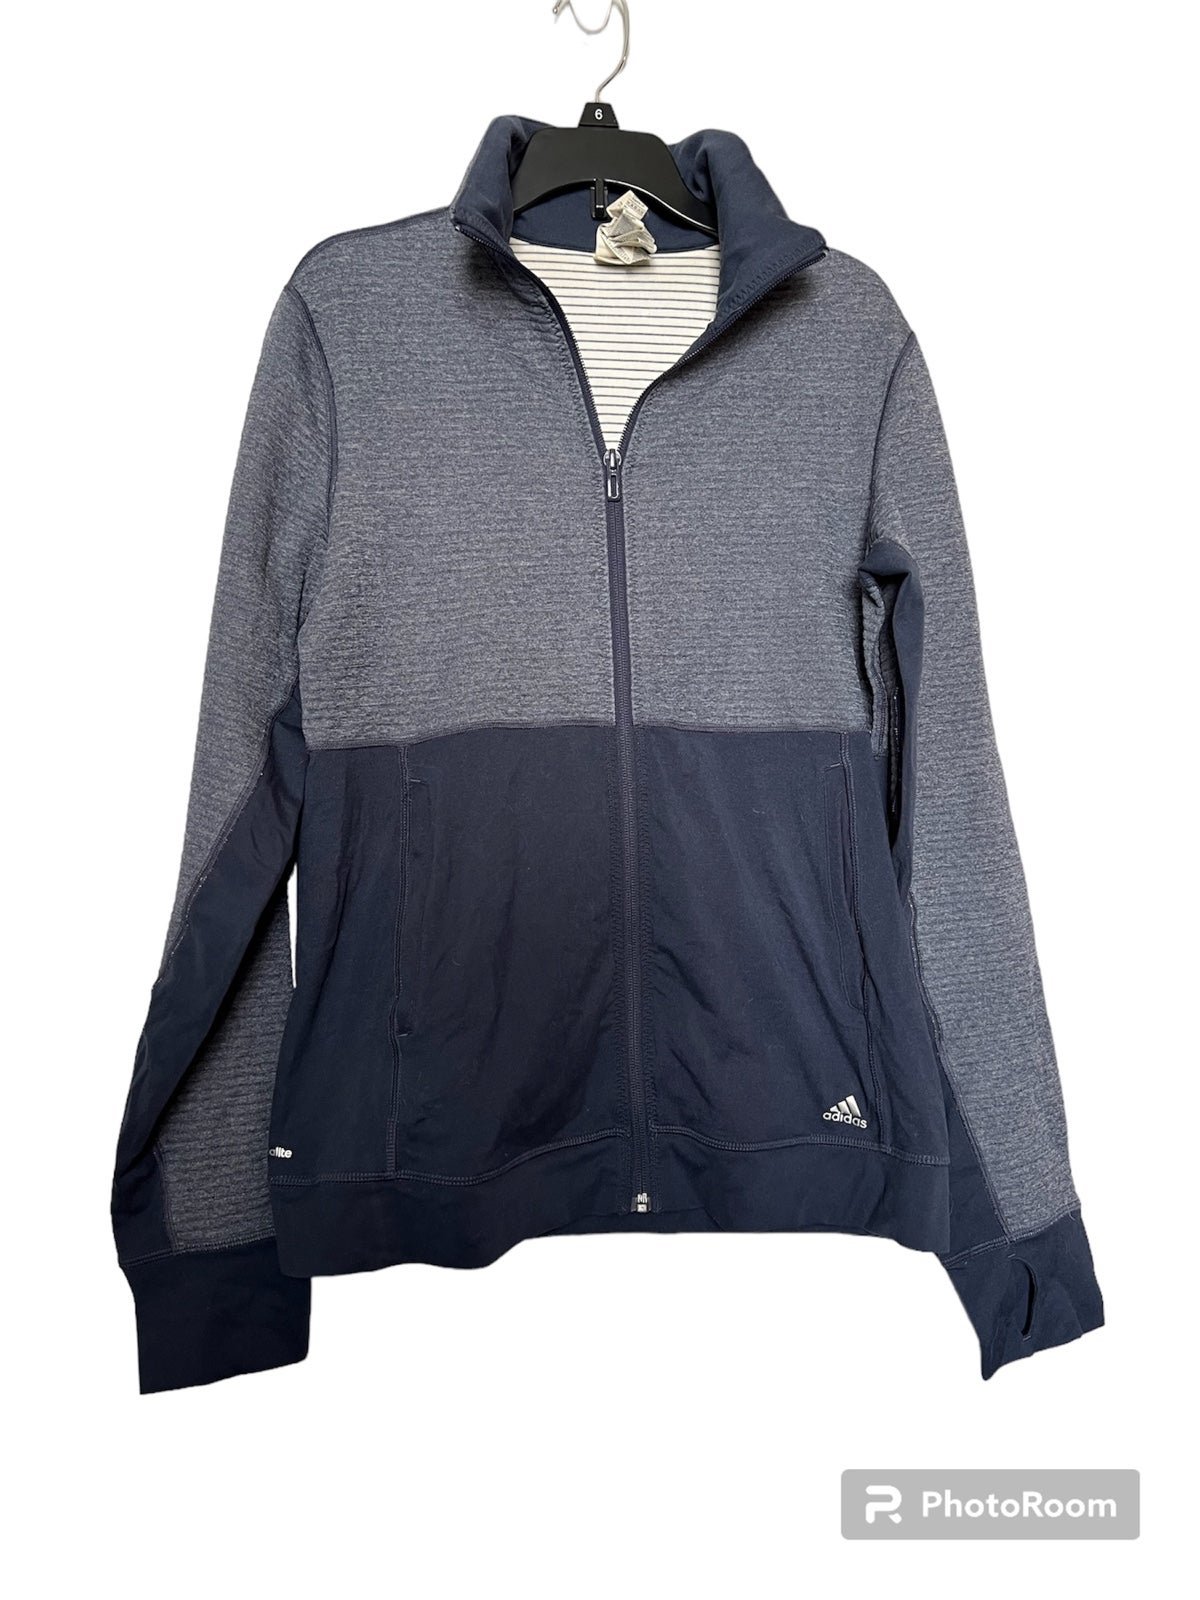 big discount Adidas Zip up jacket size S navy blue Gyat